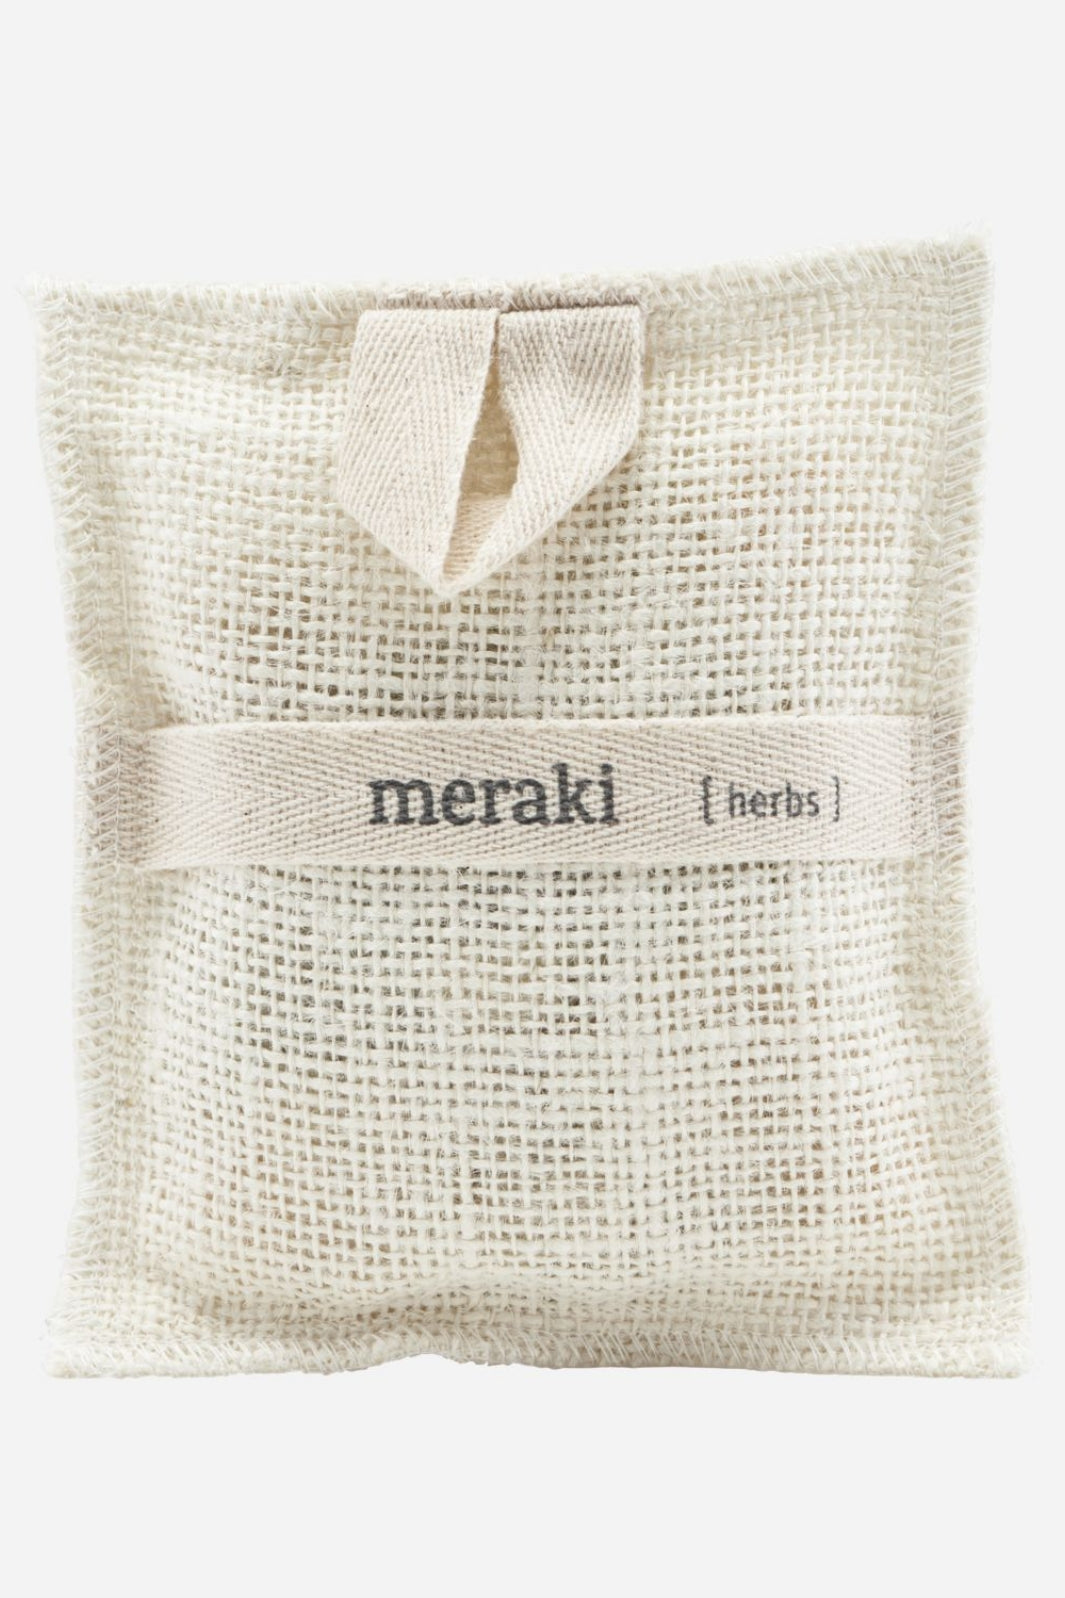 Meraki - Bath Mitt - Herbs Bad 